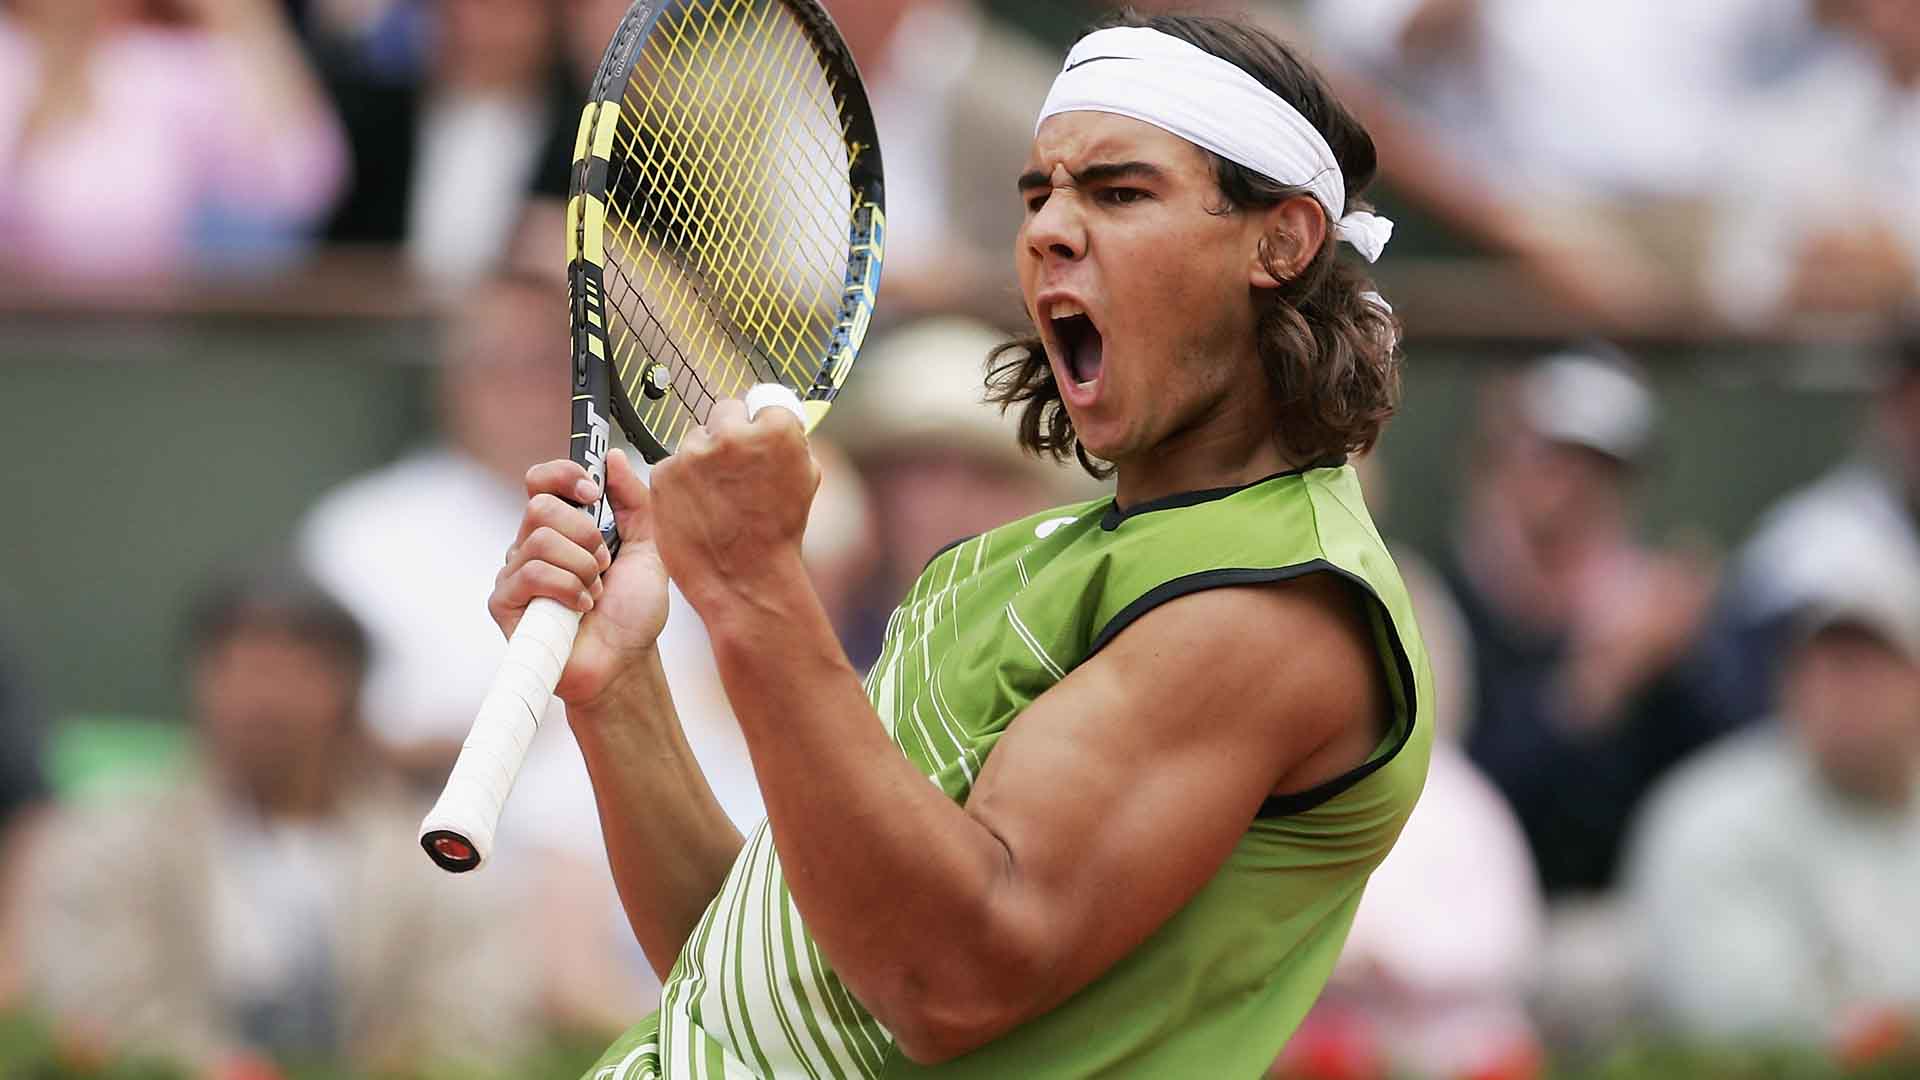 <a href='https://www.atptour.com/en/players/rafael-nadal/n409/overview'>Rafael Nadal</a> defeats <a href='https://www.atptour.com/en/players/mariano-puerta/p372/overview'>Mariano Puerta</a> of Argentina 6-7(6), 6-3, 6-1, 7-5 to win his first Grand Slam title at <a href='https://www.atptour.com/en/tournaments/roland-garros/520/overview'>Roland Garros</a> in 2005.